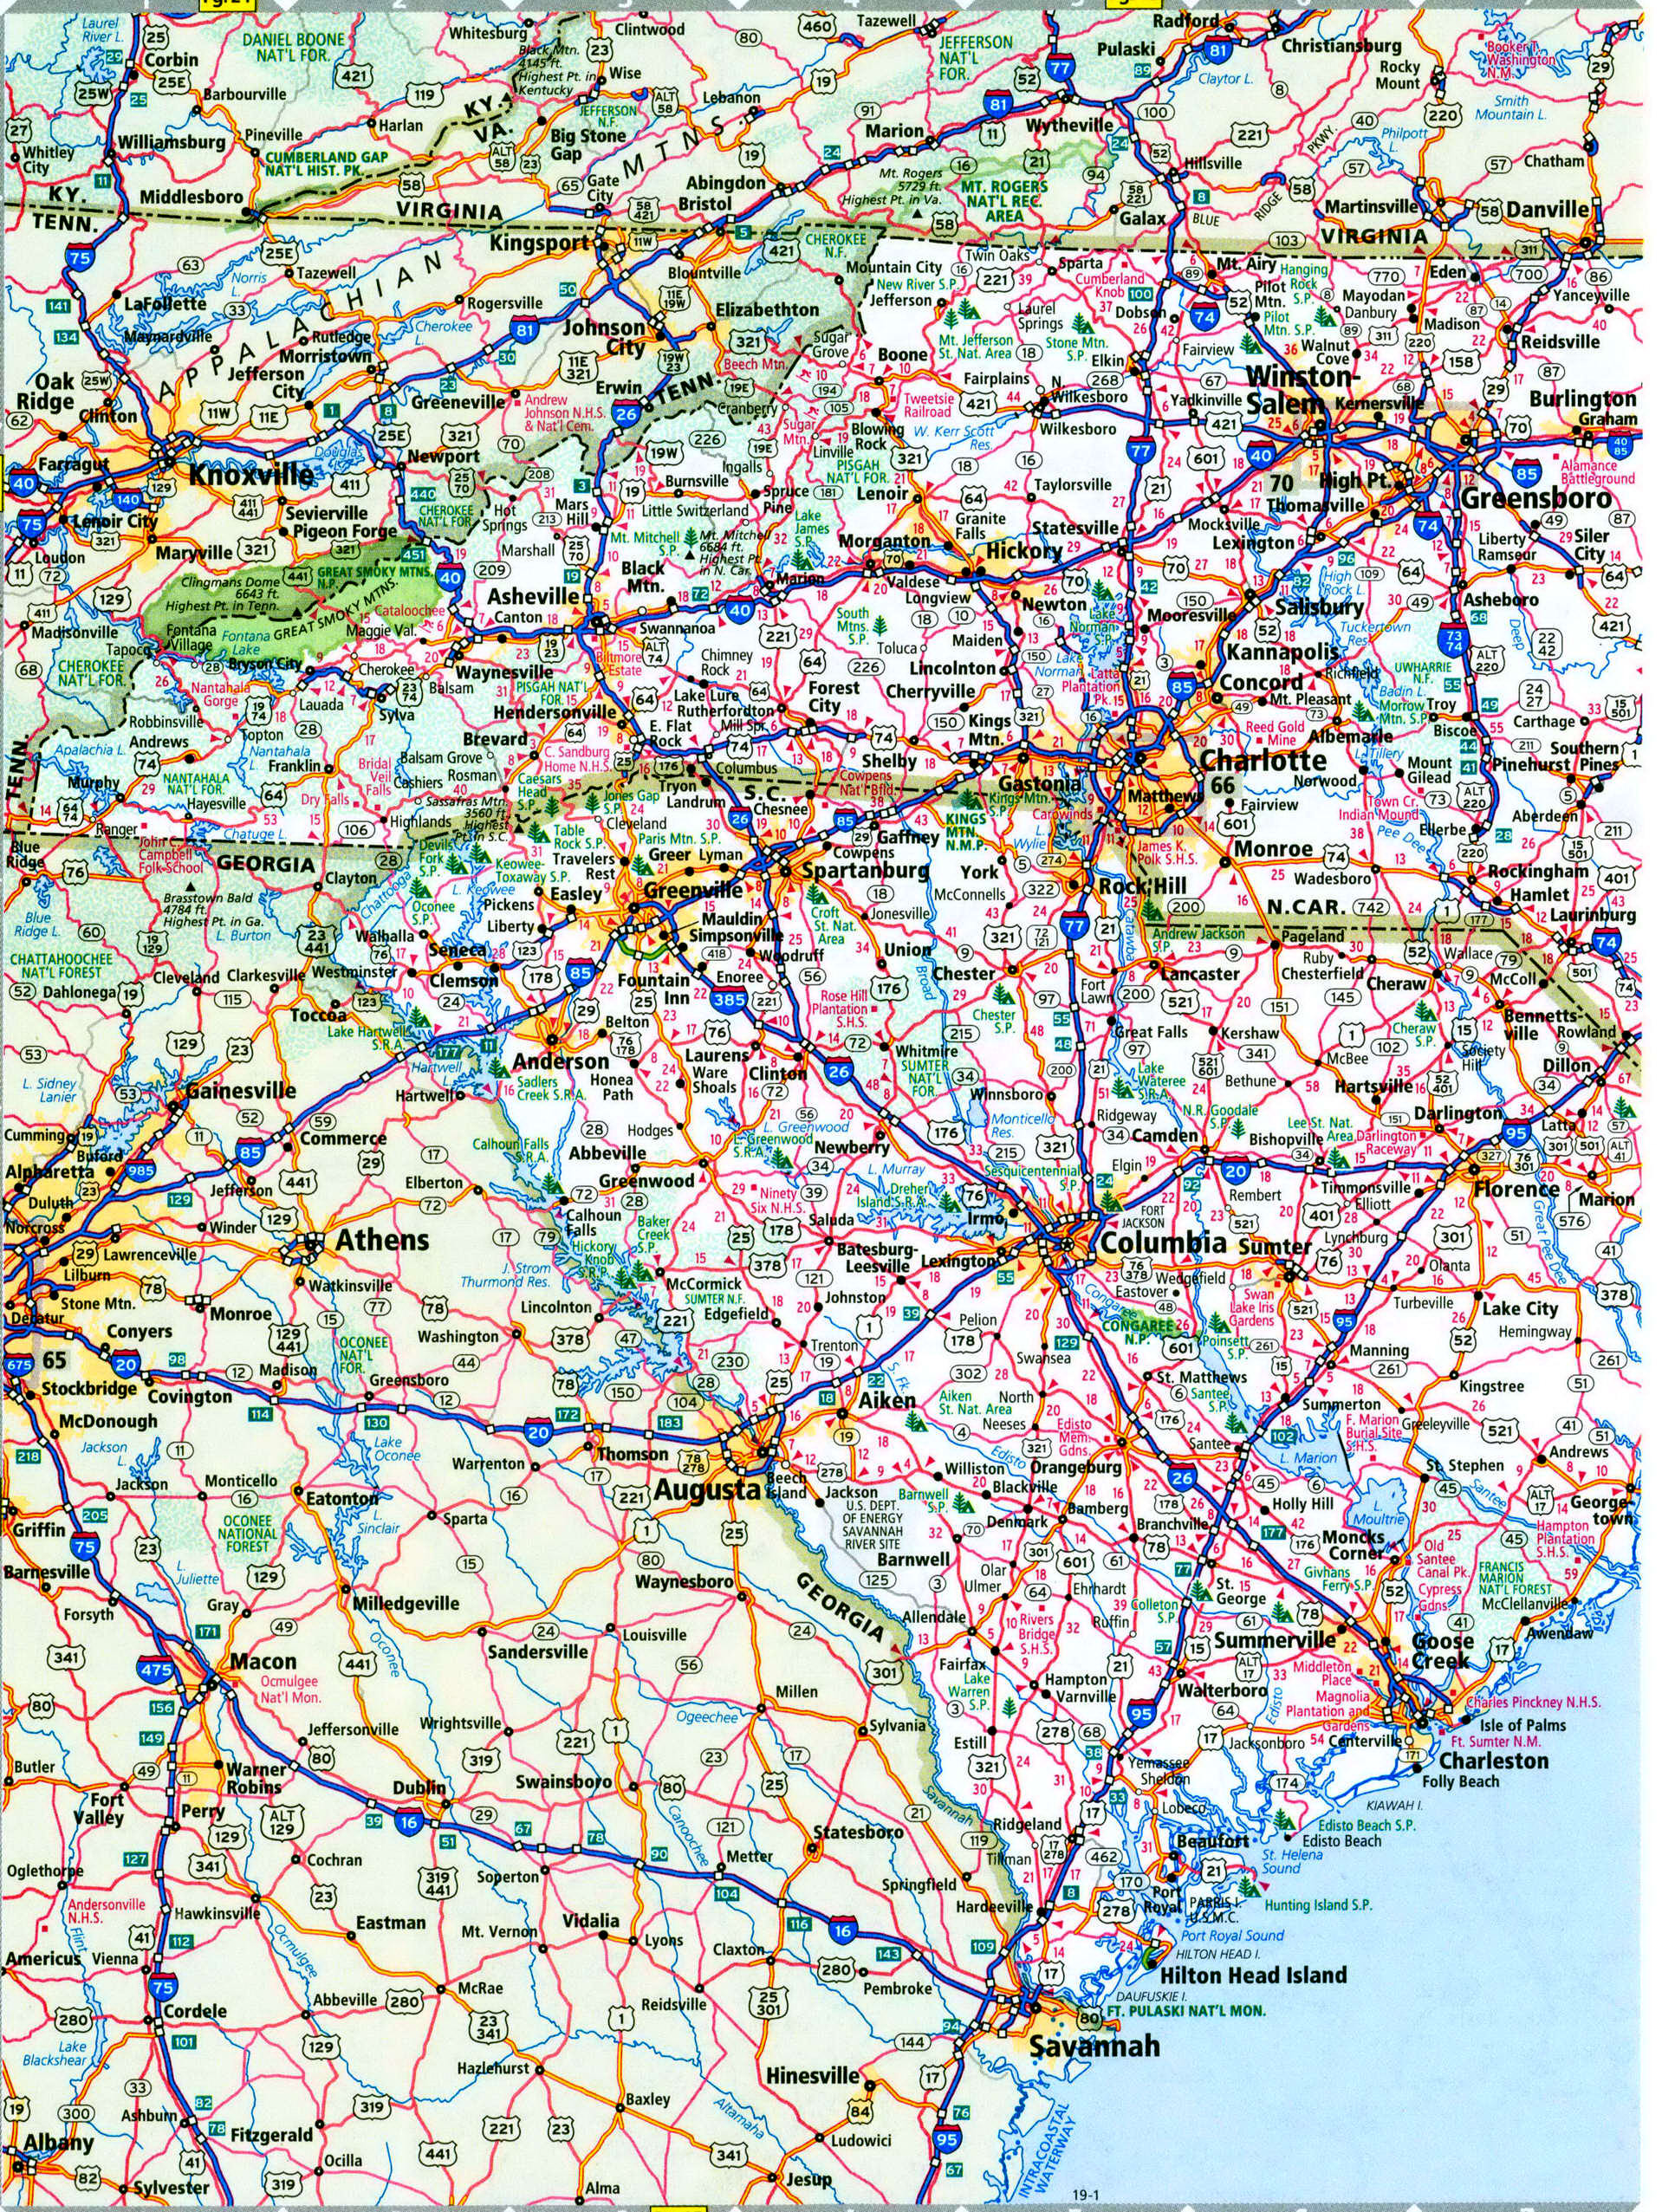 North Carolina interstate highway map